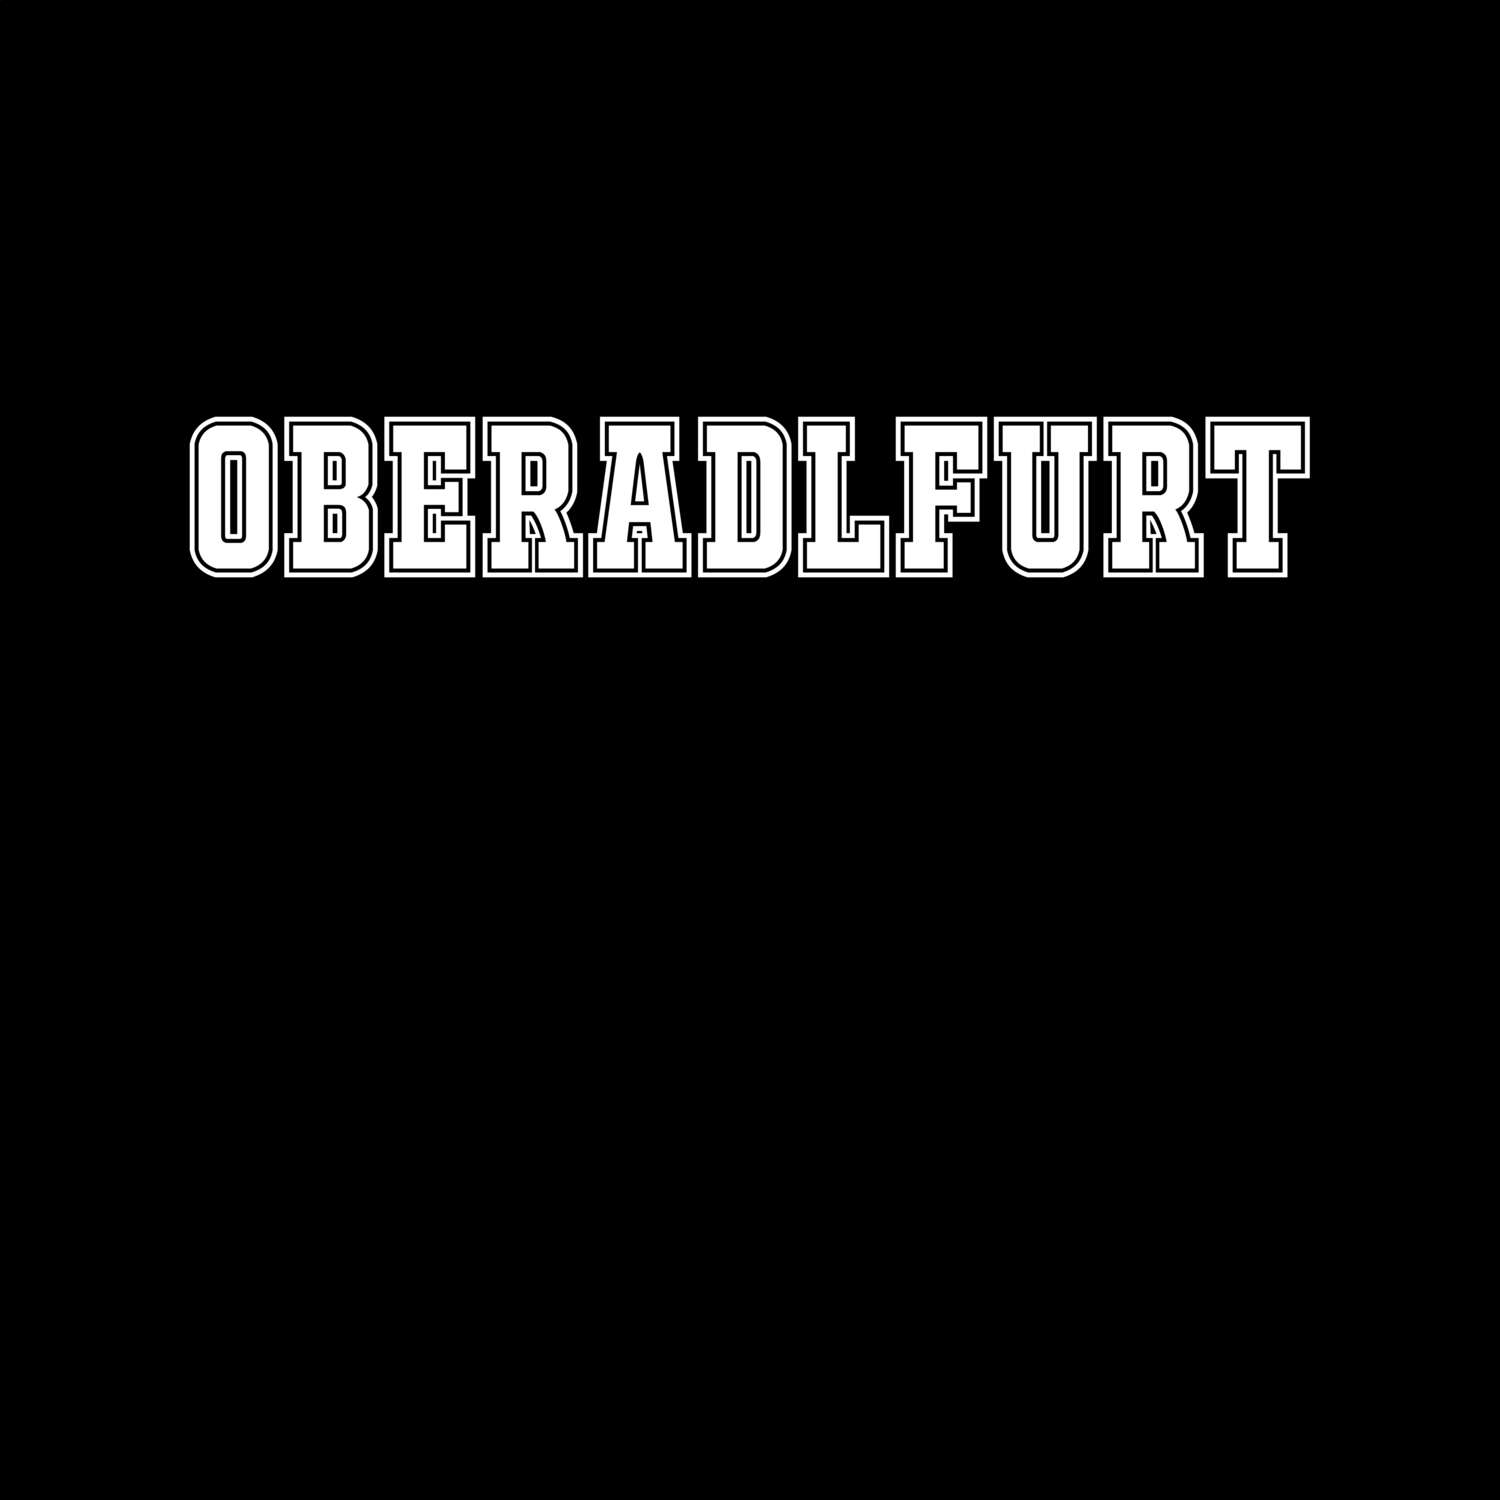 Oberadlfurt T-Shirt »Classic«